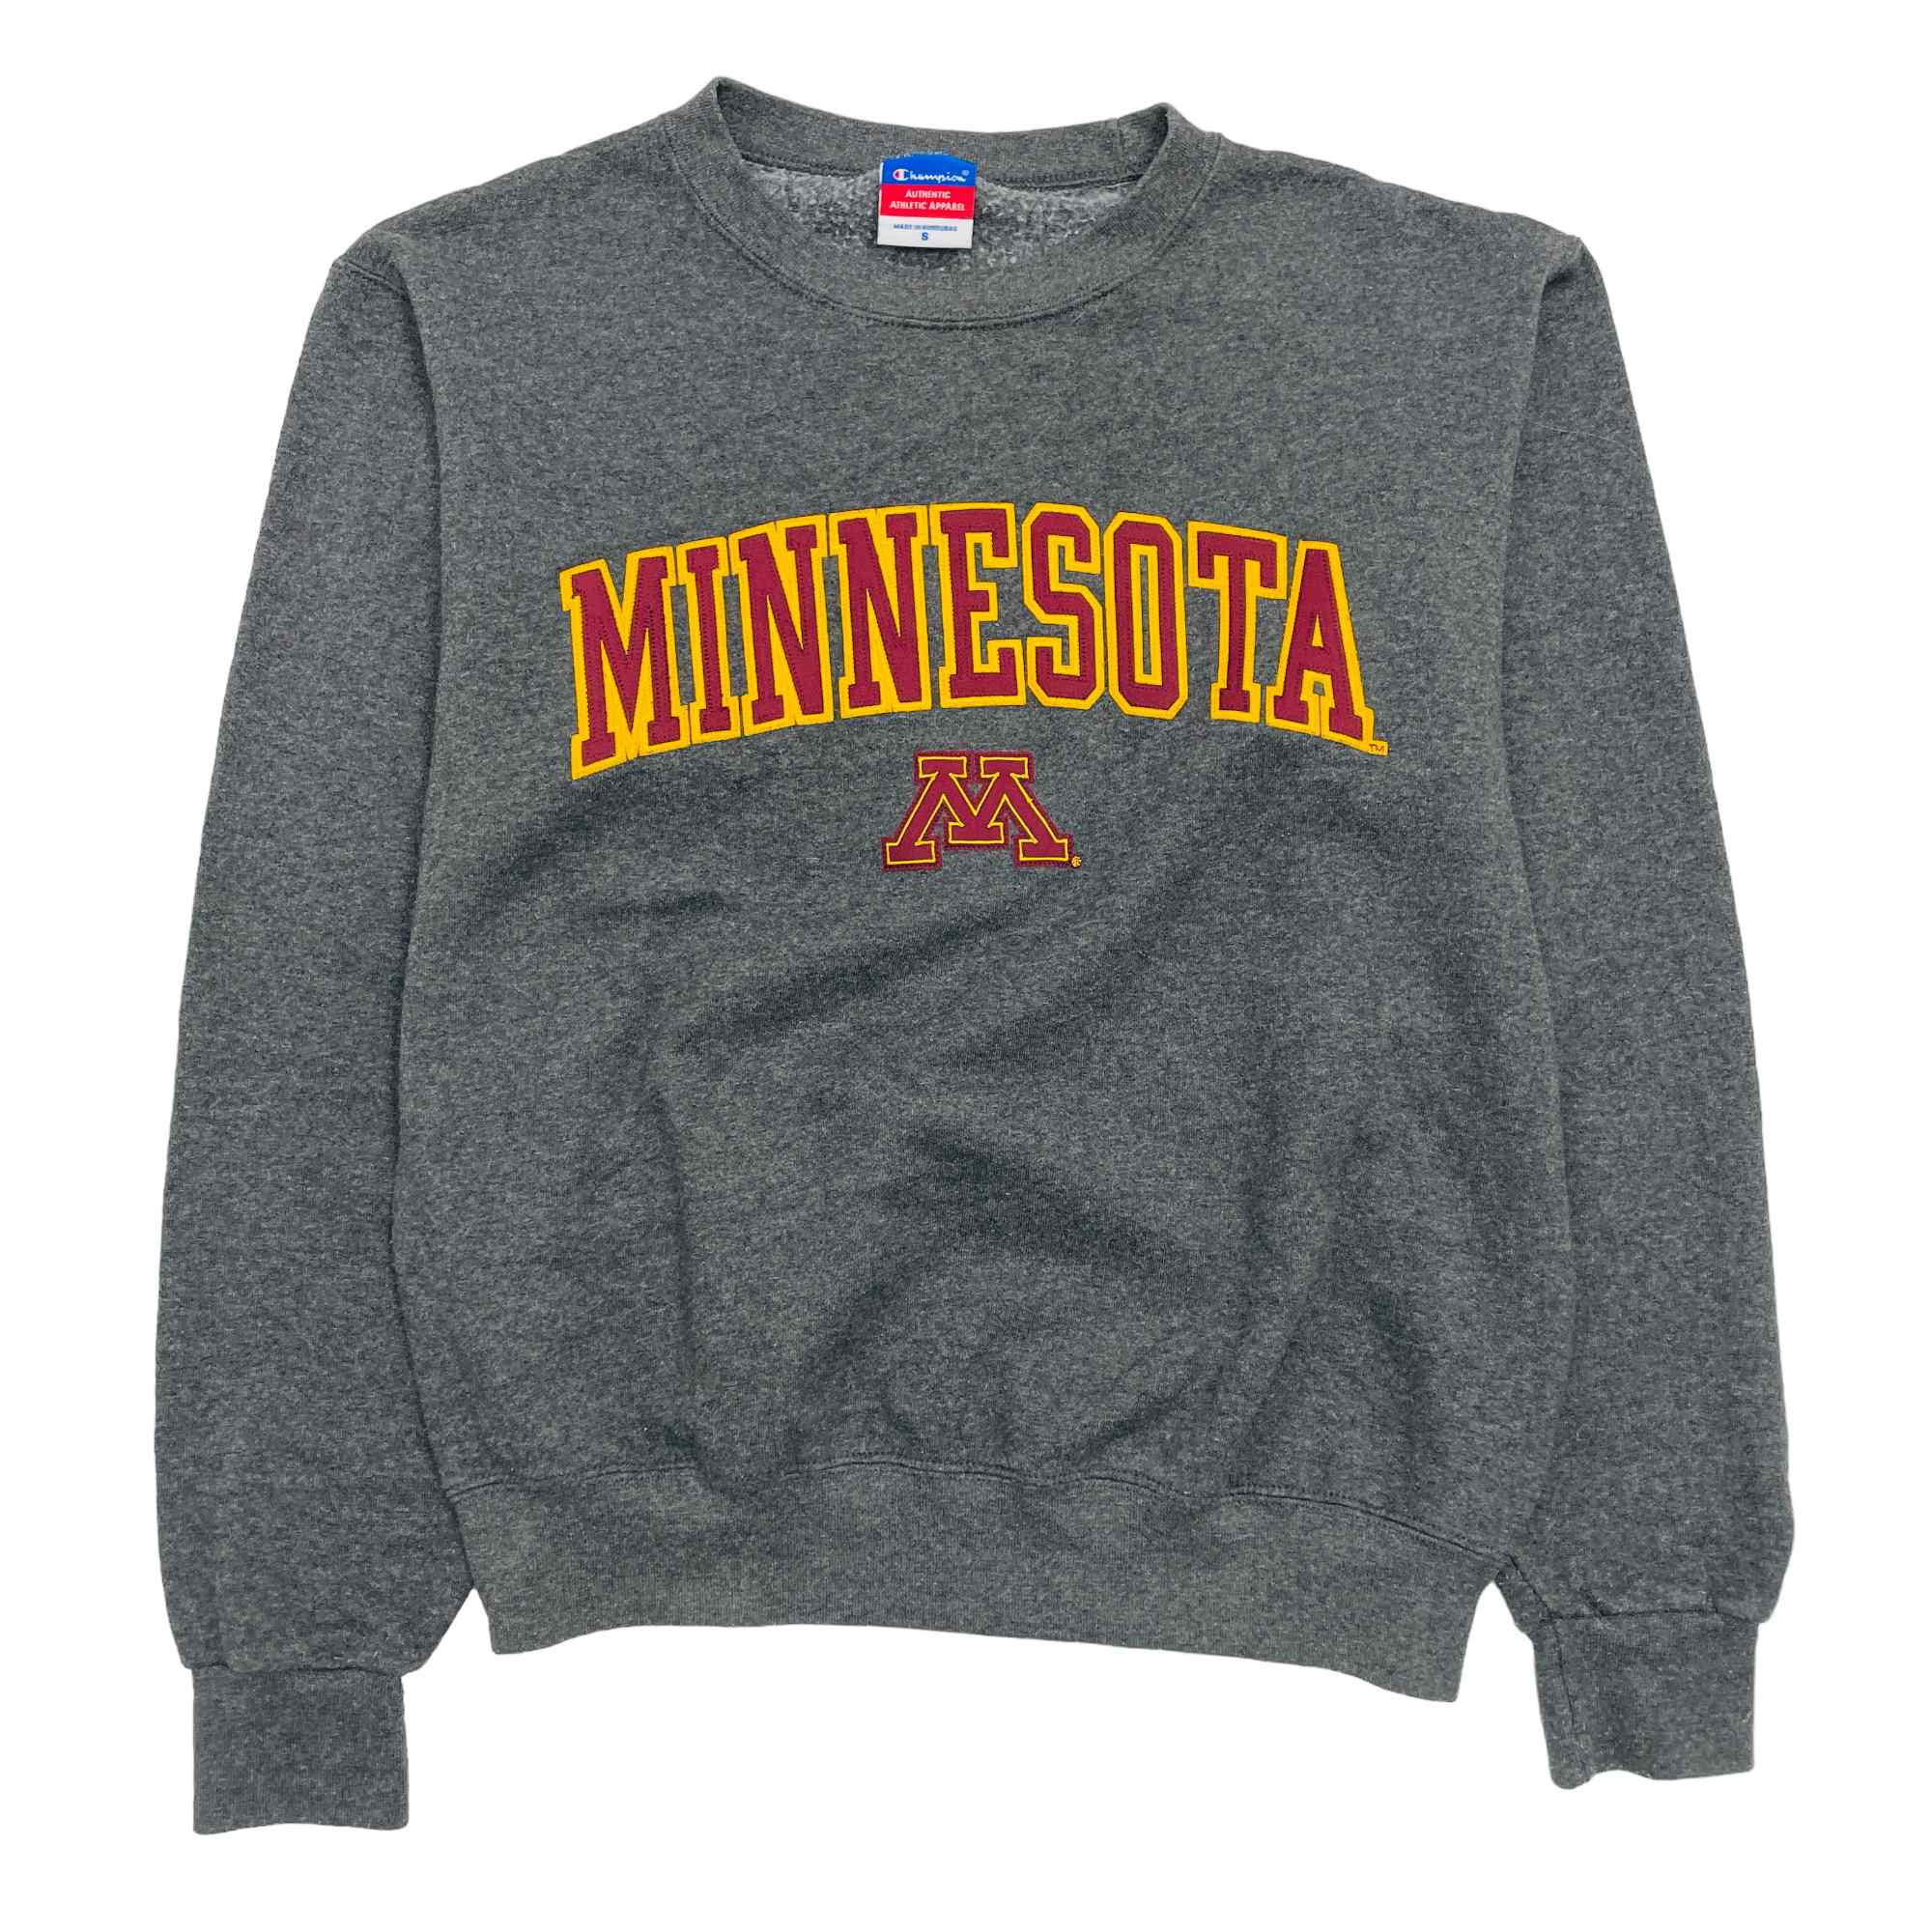 University of Minnesota Sweatshirt - Small